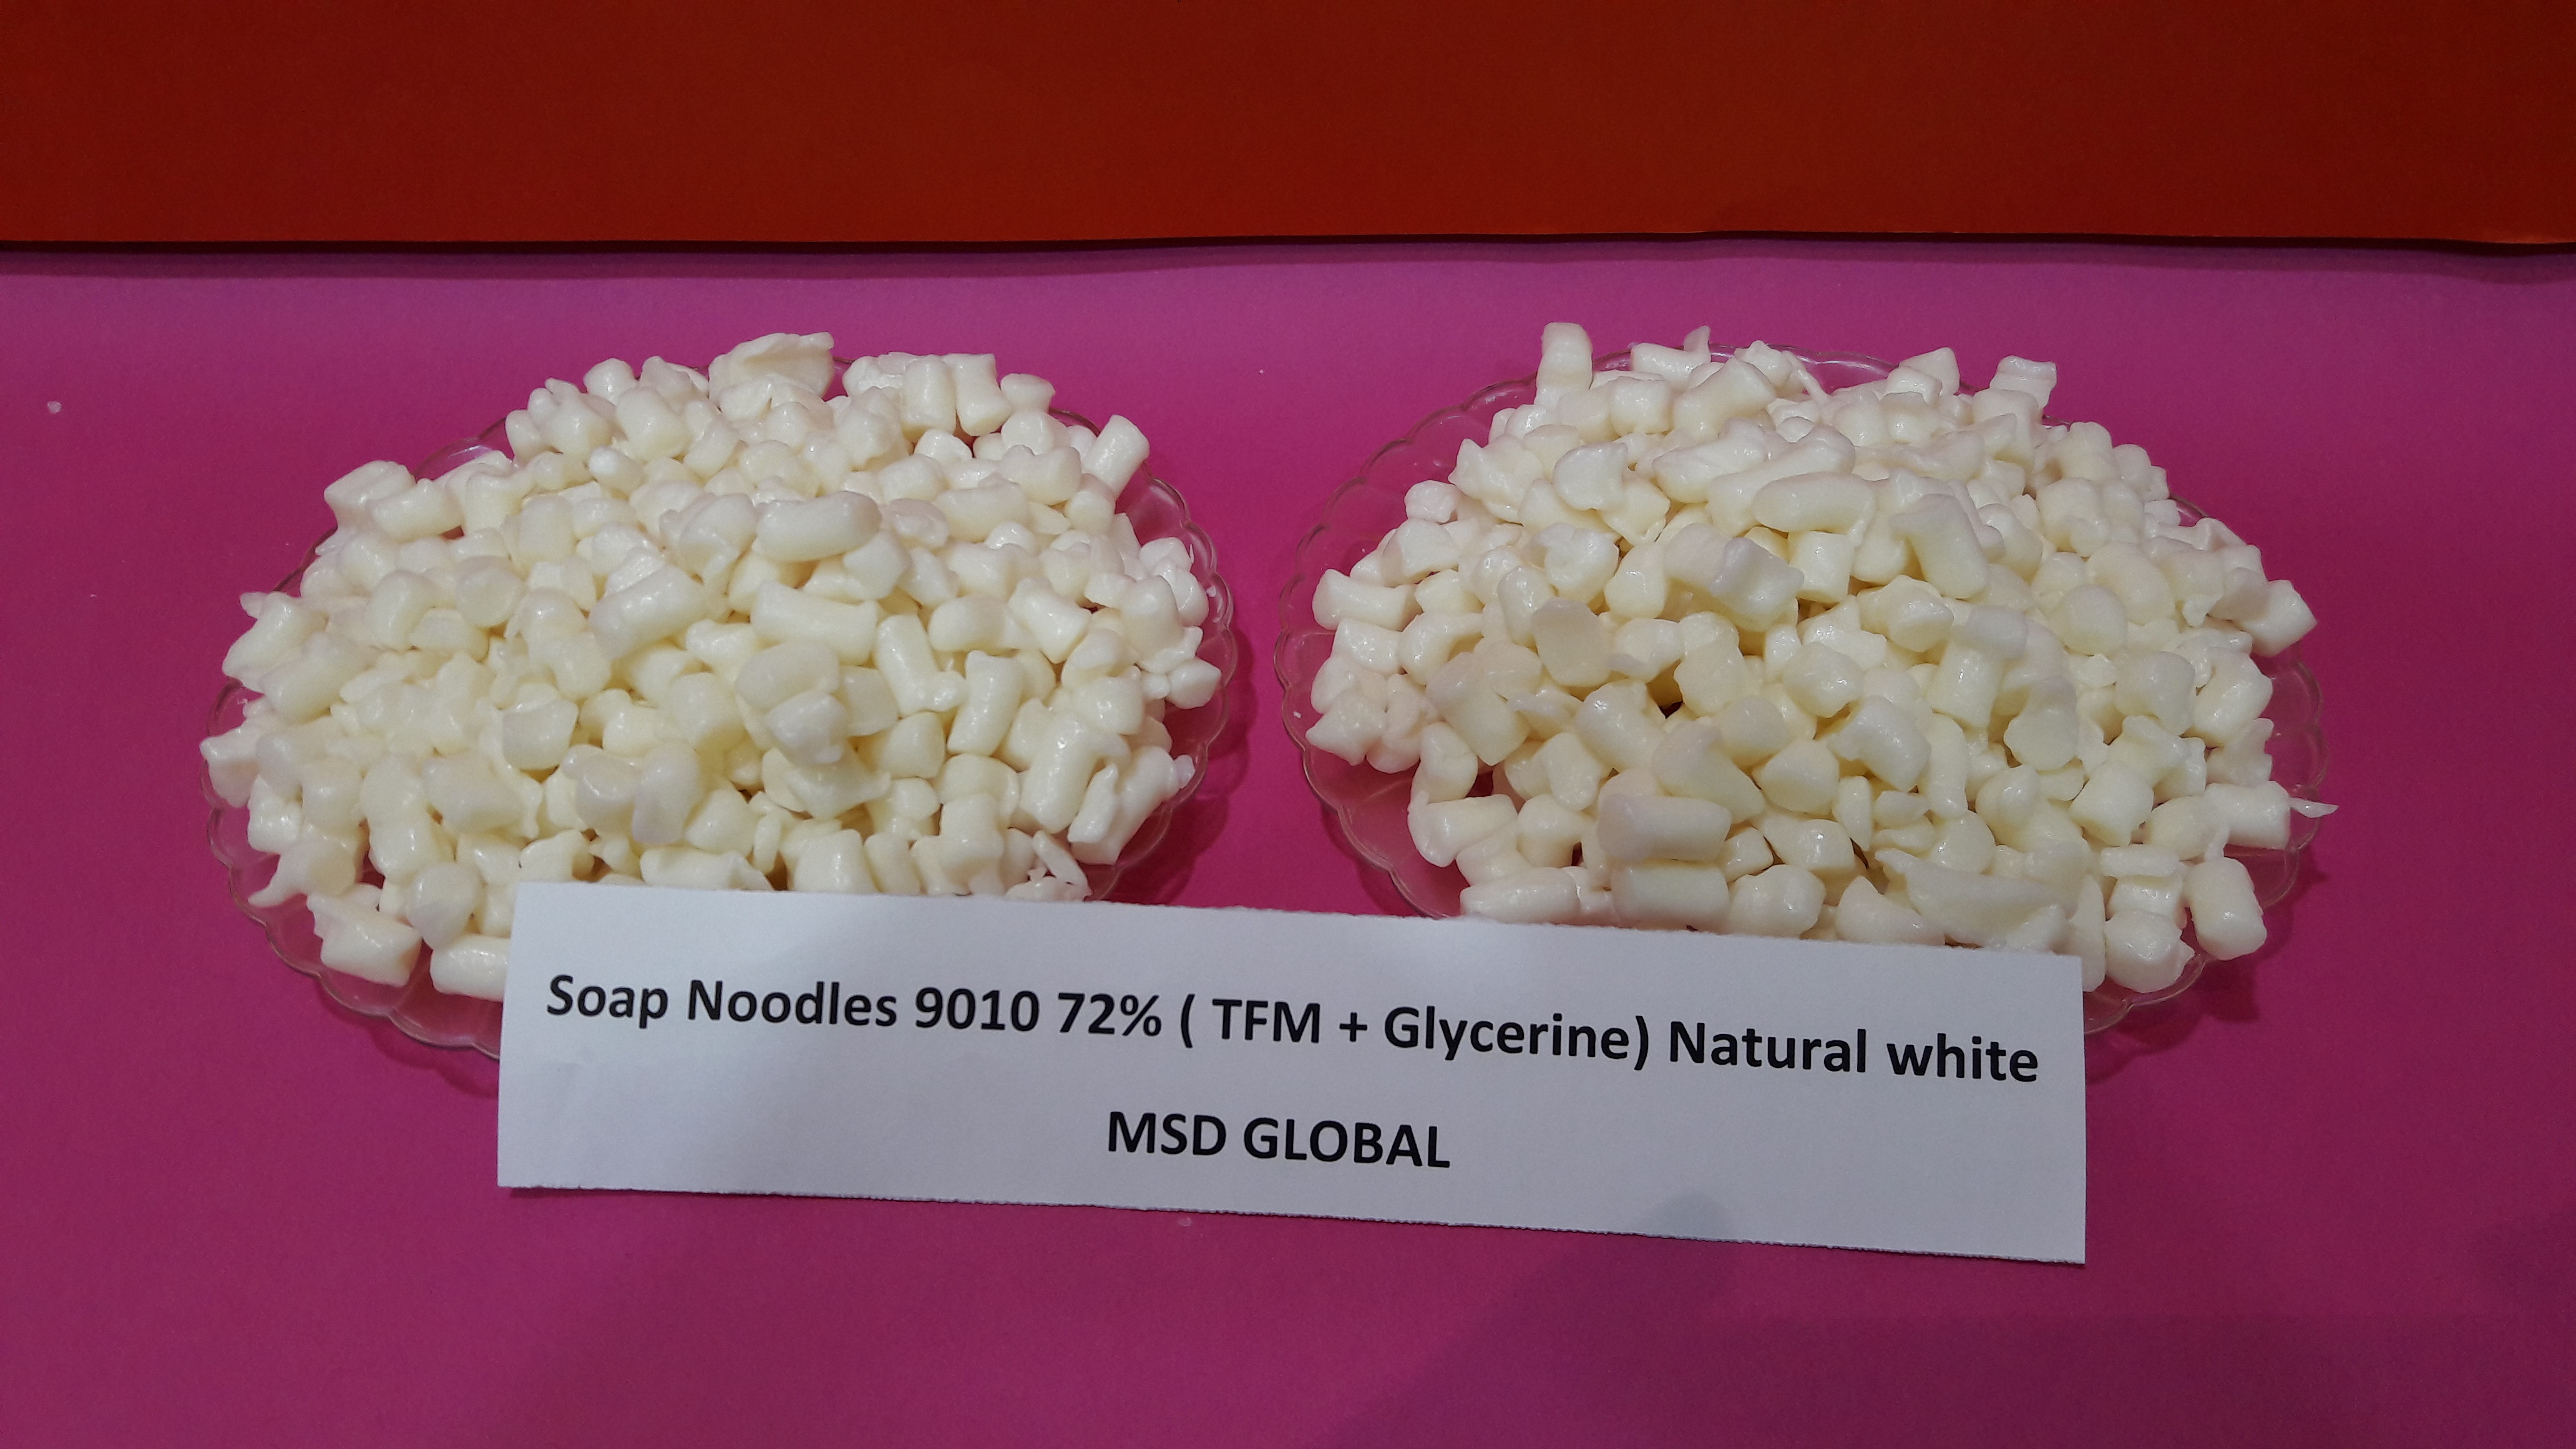 SOAP NOODLES 9010 72% Natural white